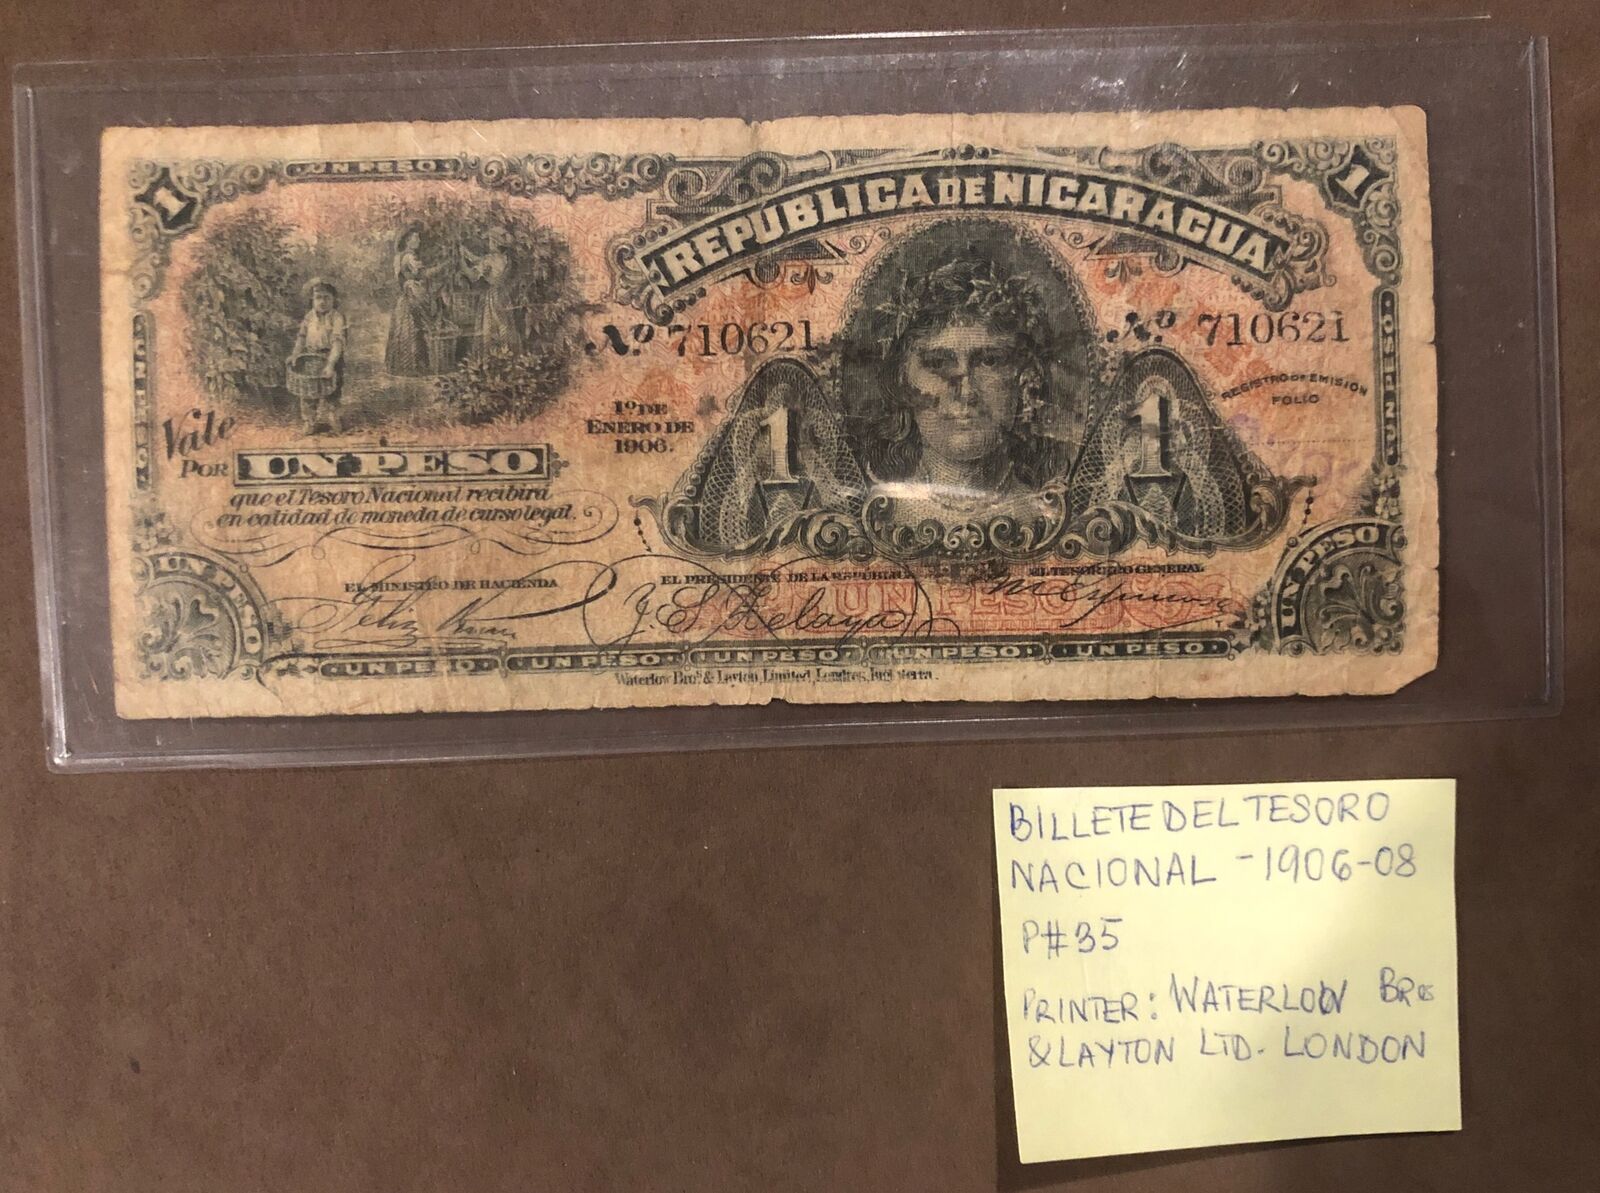 1906-08 Nicaragua 1 peso “Scarce “Banknote  Pick #35-Waterlow & Layton,London